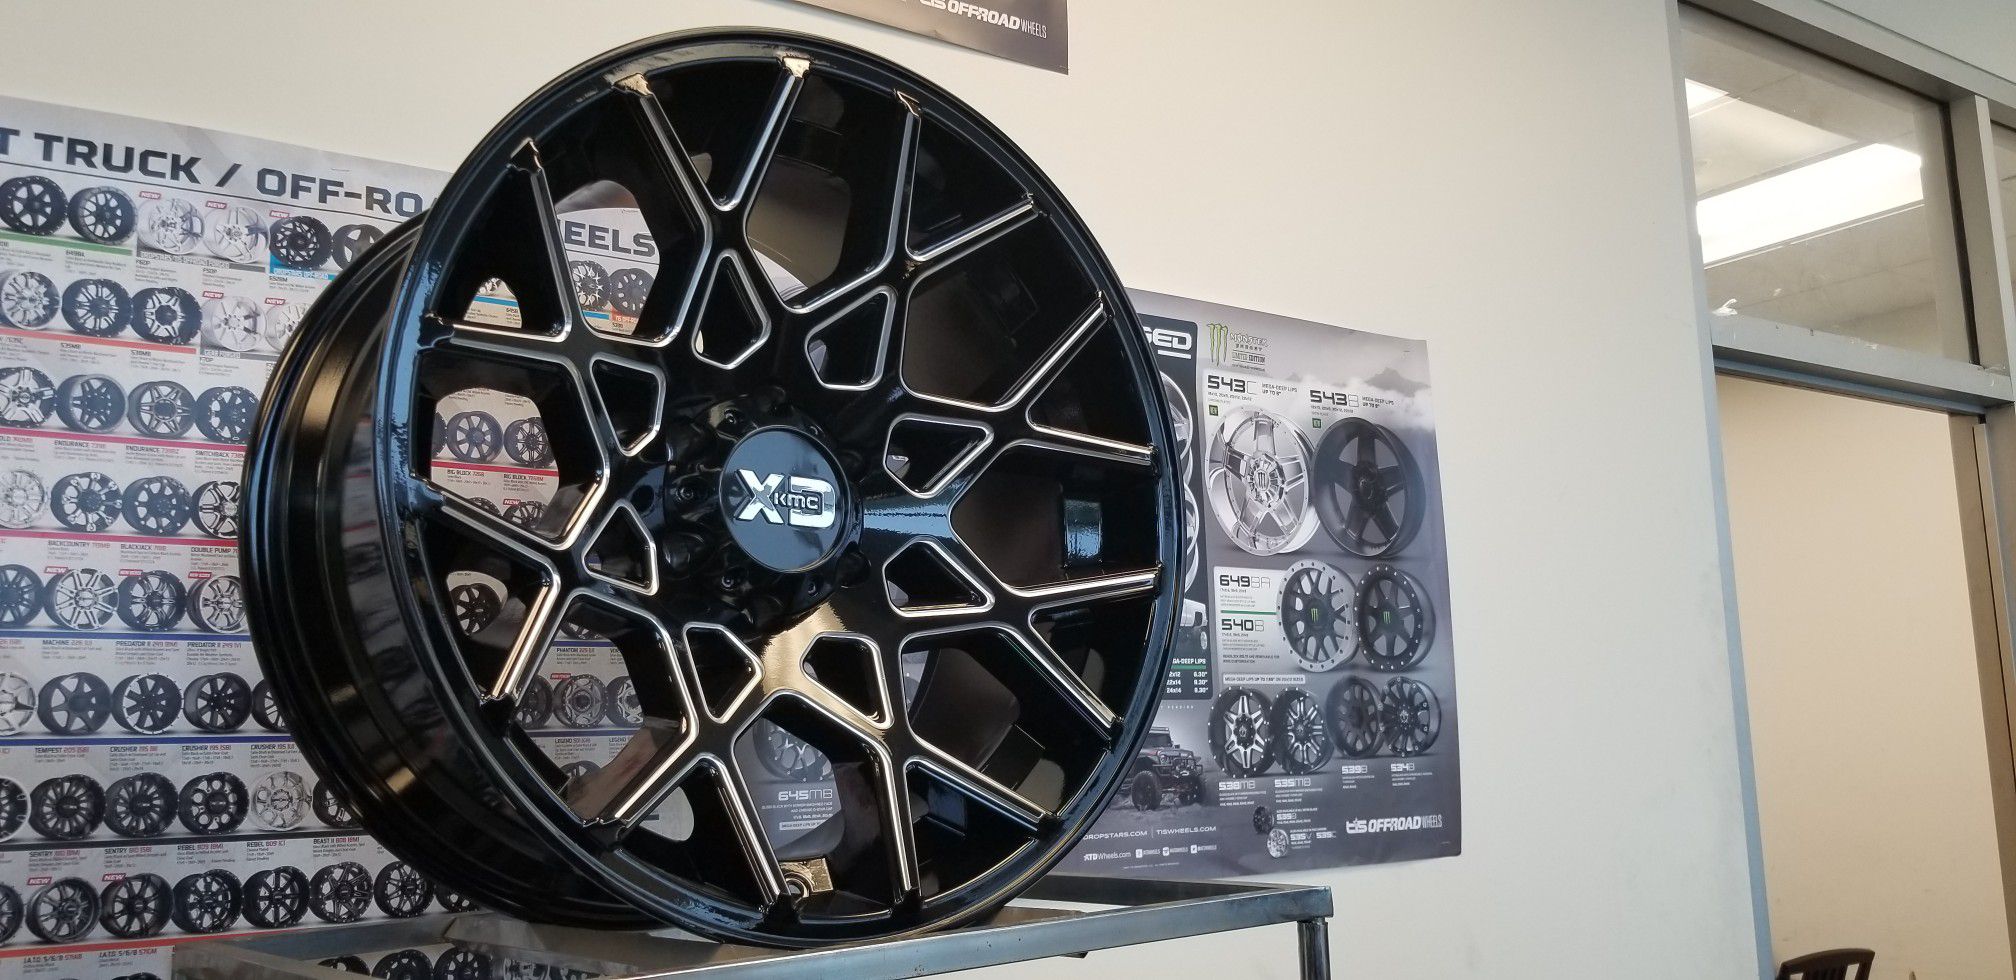 New 20x10 XD series Wheels Black Milled Rims 6lugs Fit Silverado Tacoma GMC Sale set of 4